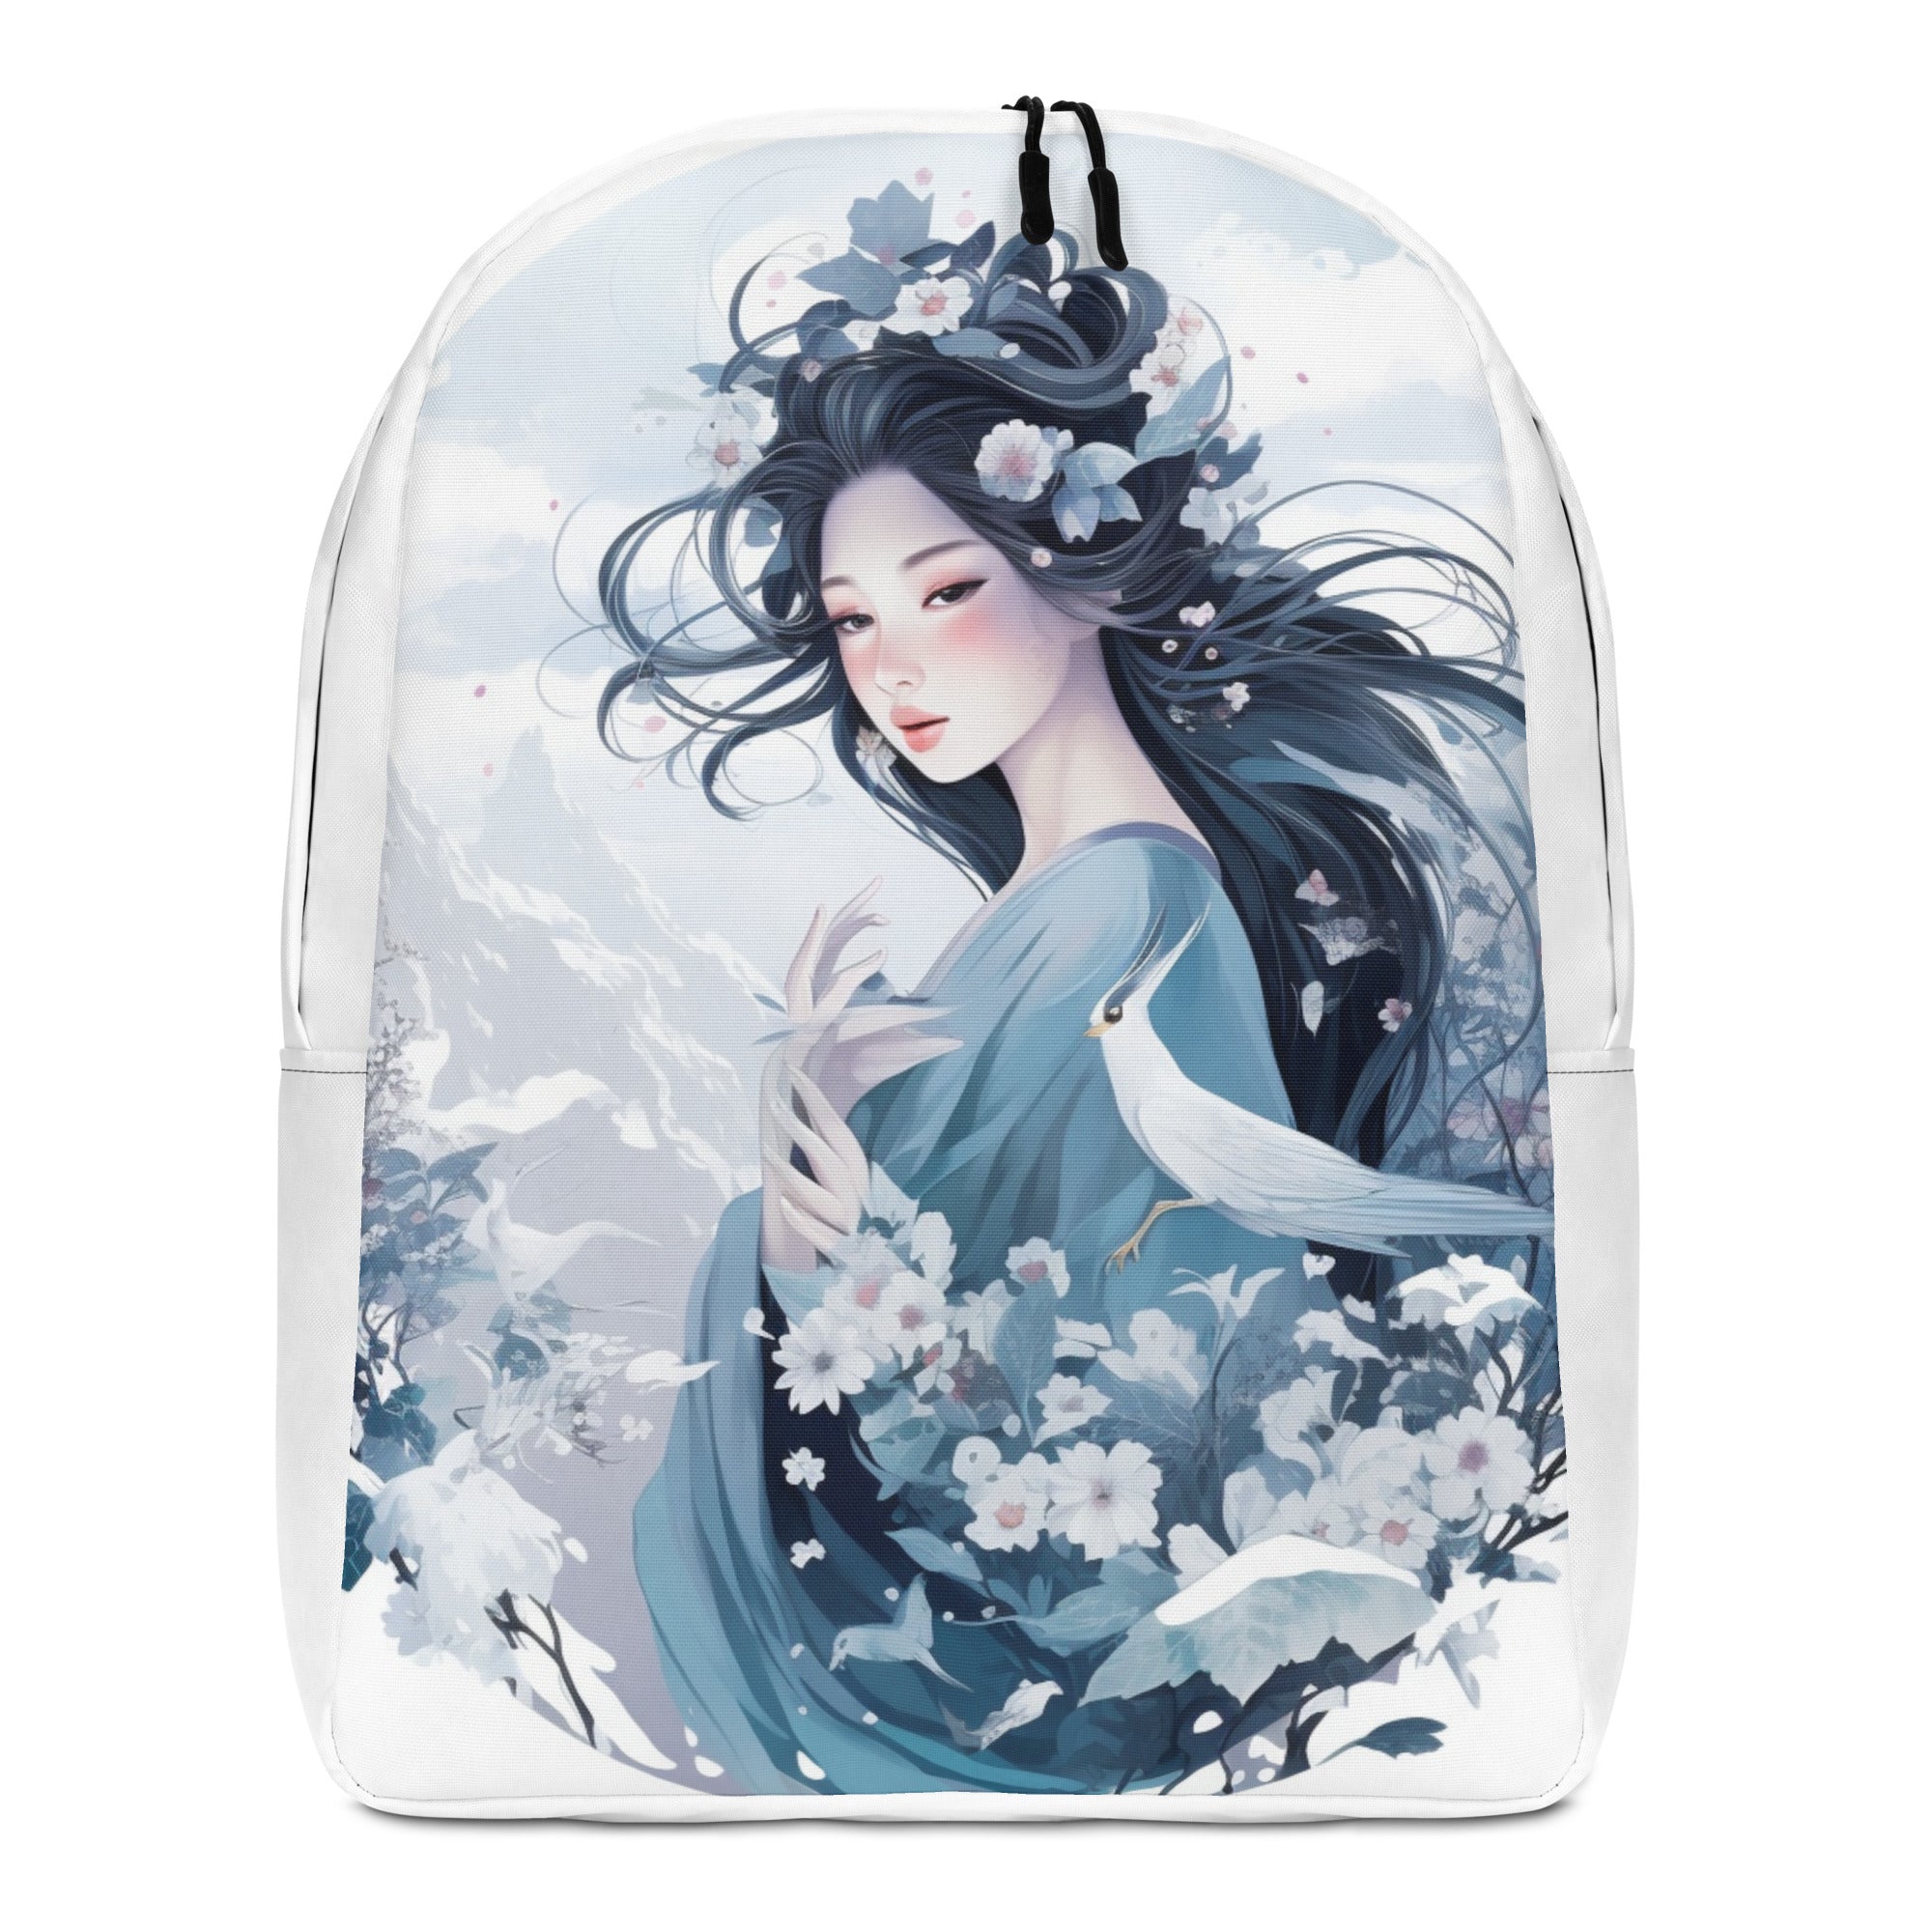 Yuki Onna Japanese Fairy Style Minimalist Backpack for Girls | Japanese School Bag | Fairy School Backpack